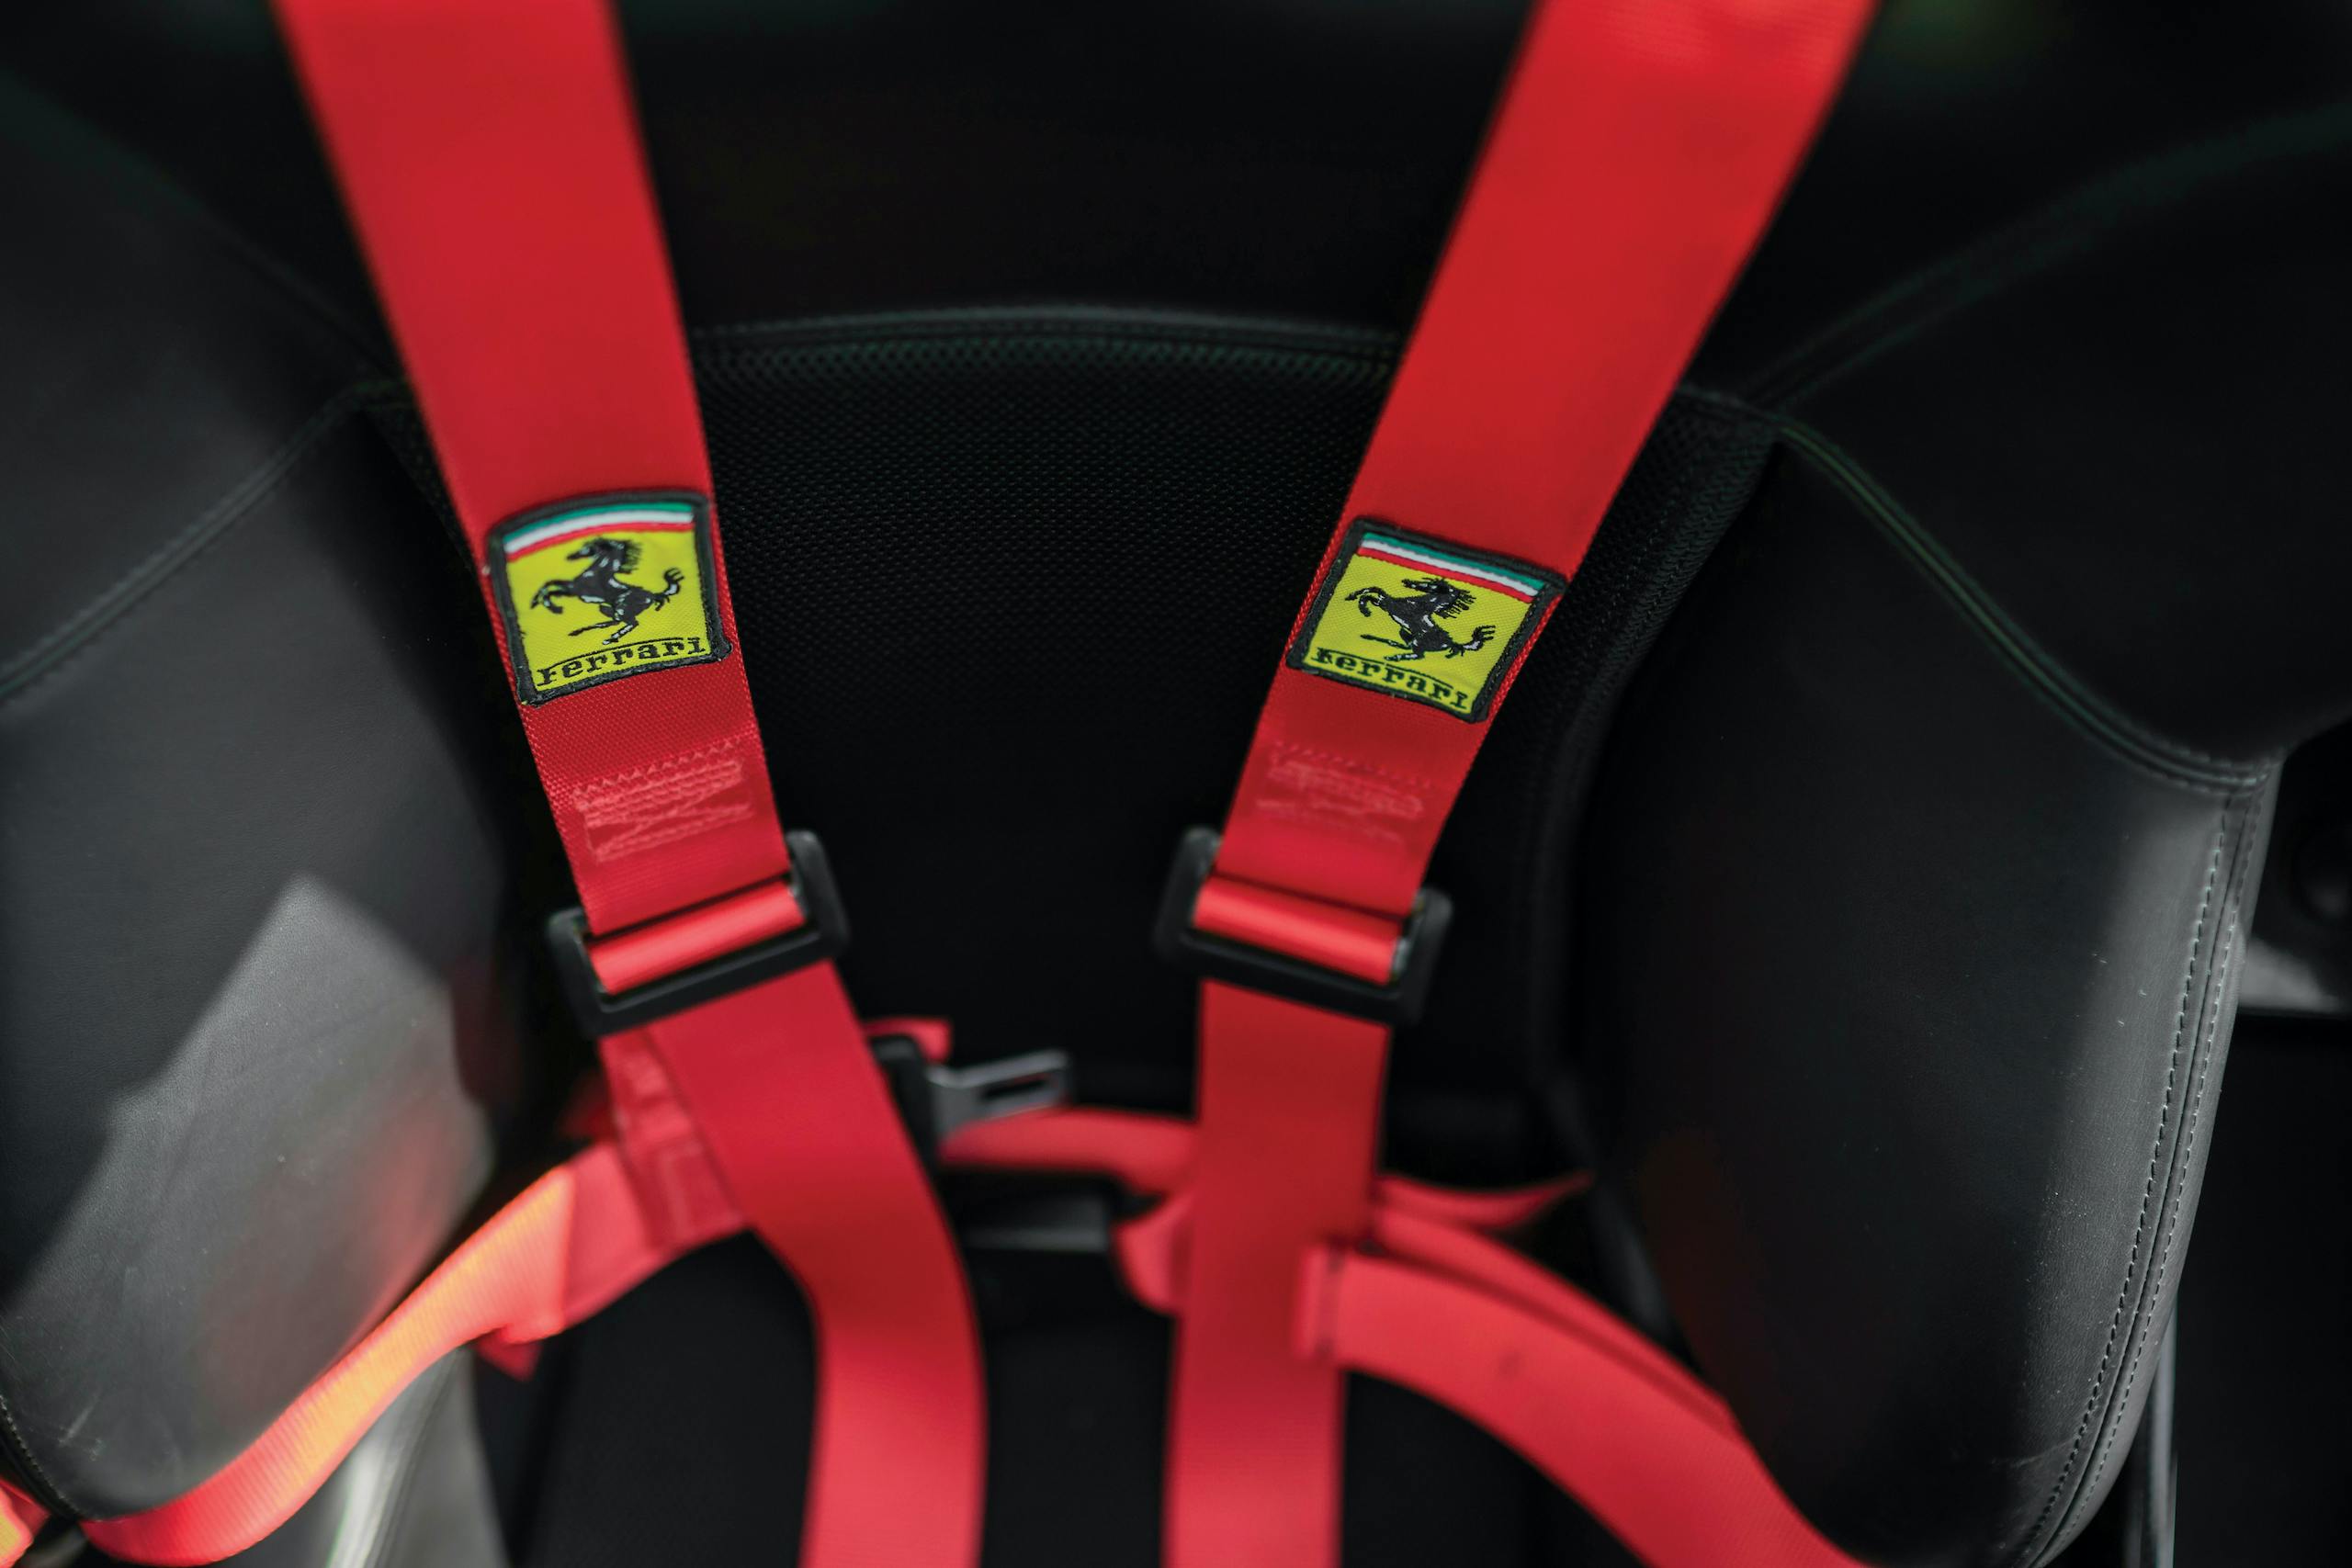 2003 Ferrari Enzo seatbelt harness detail